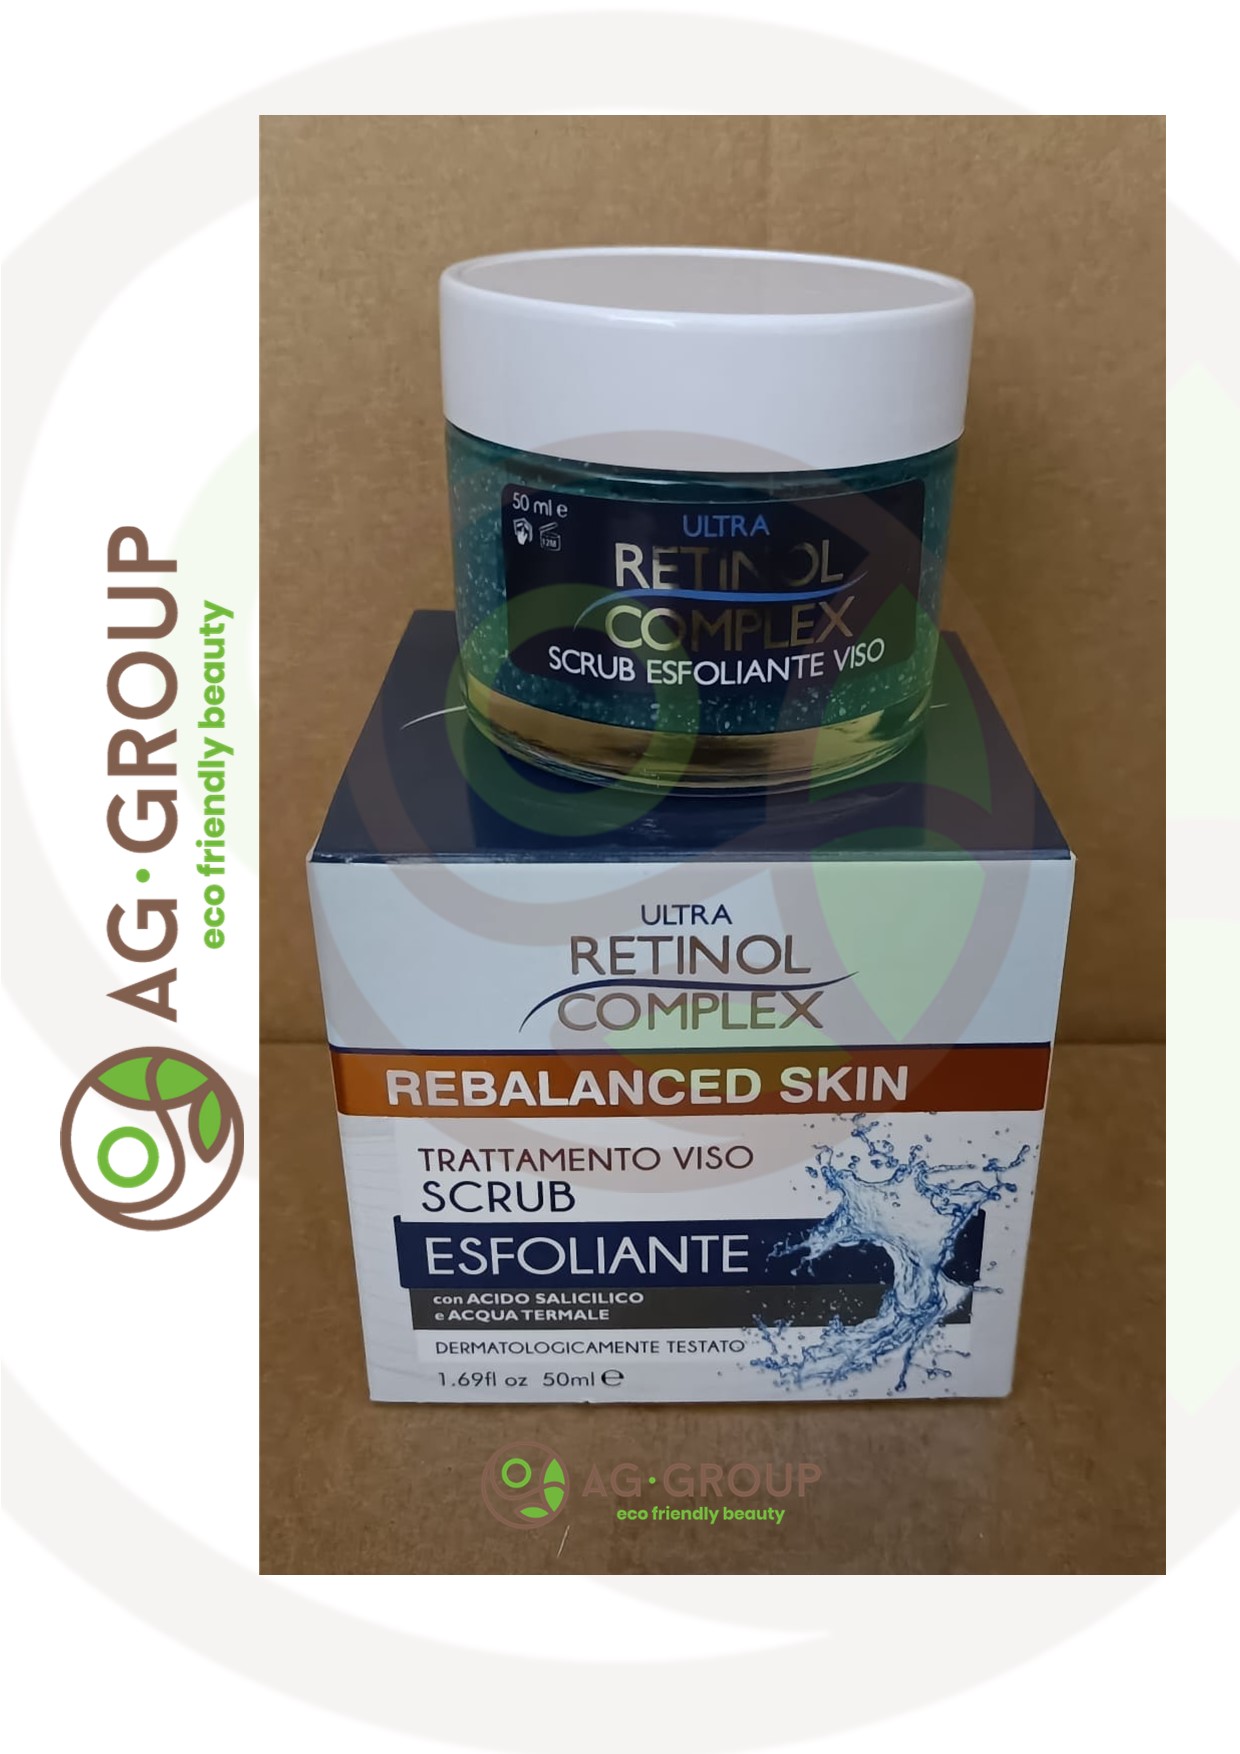 Featured image for “Scrub esfoliante viso con acido salicilico”